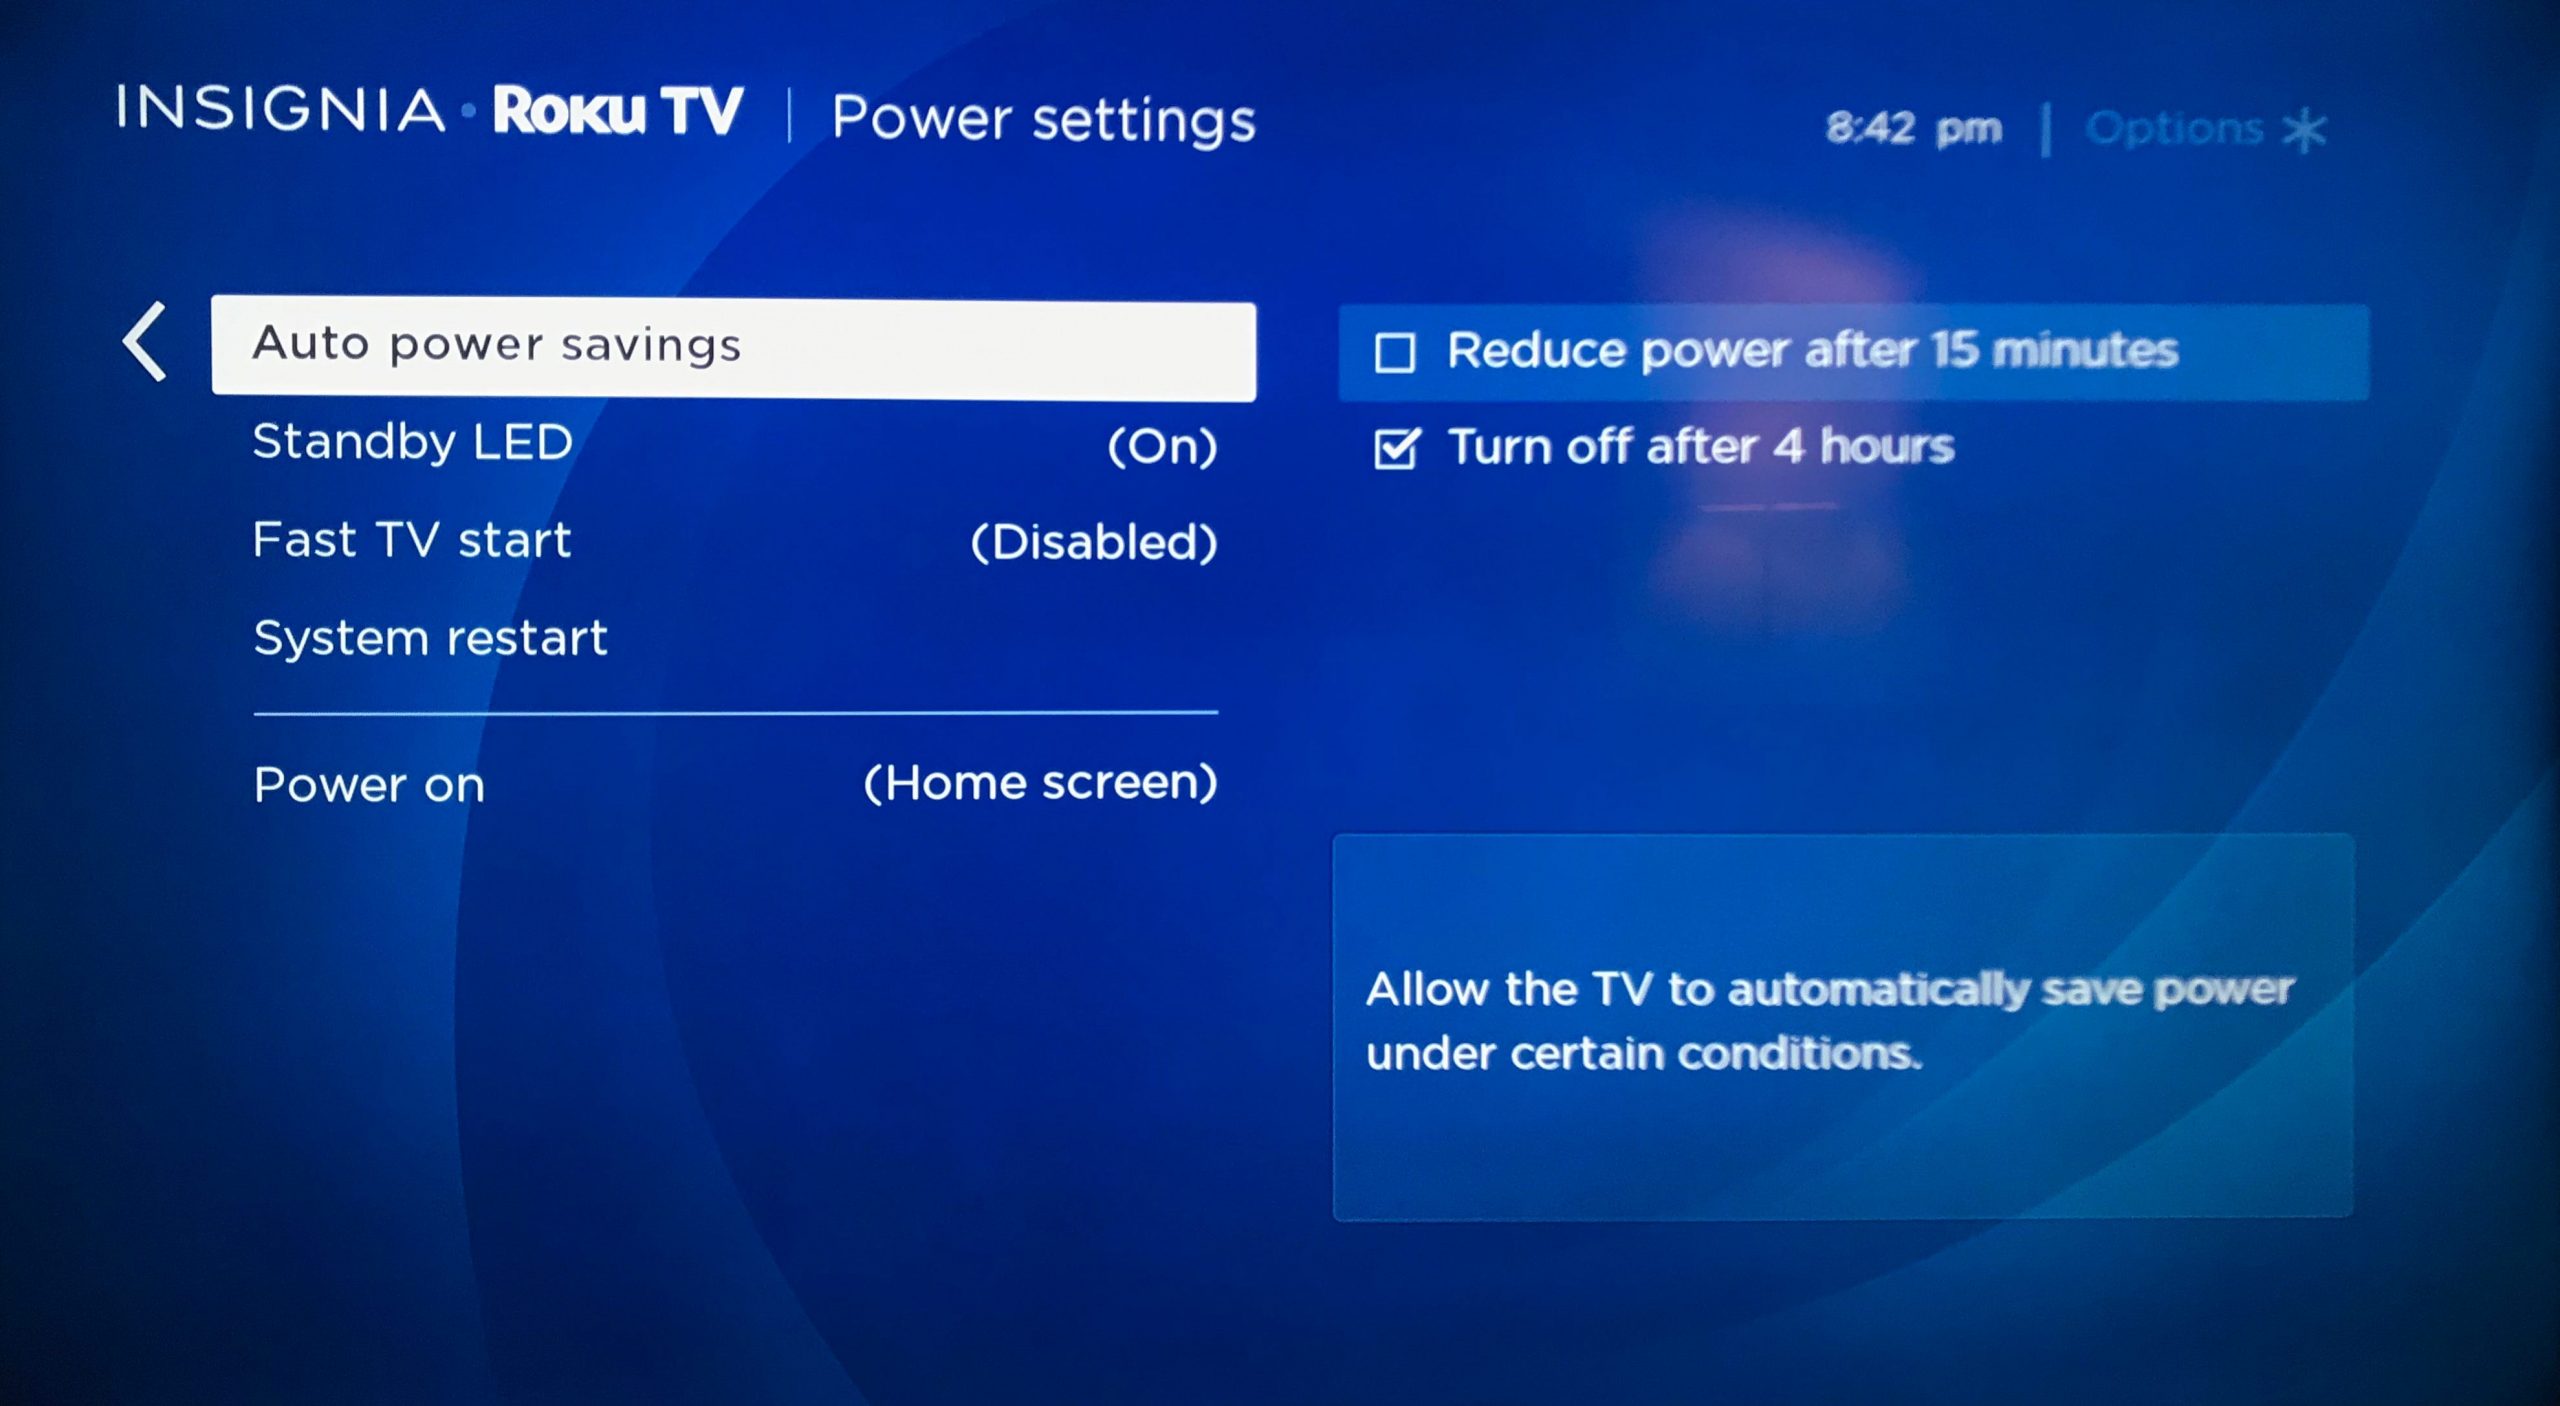 The Power settings on a Roku TV.